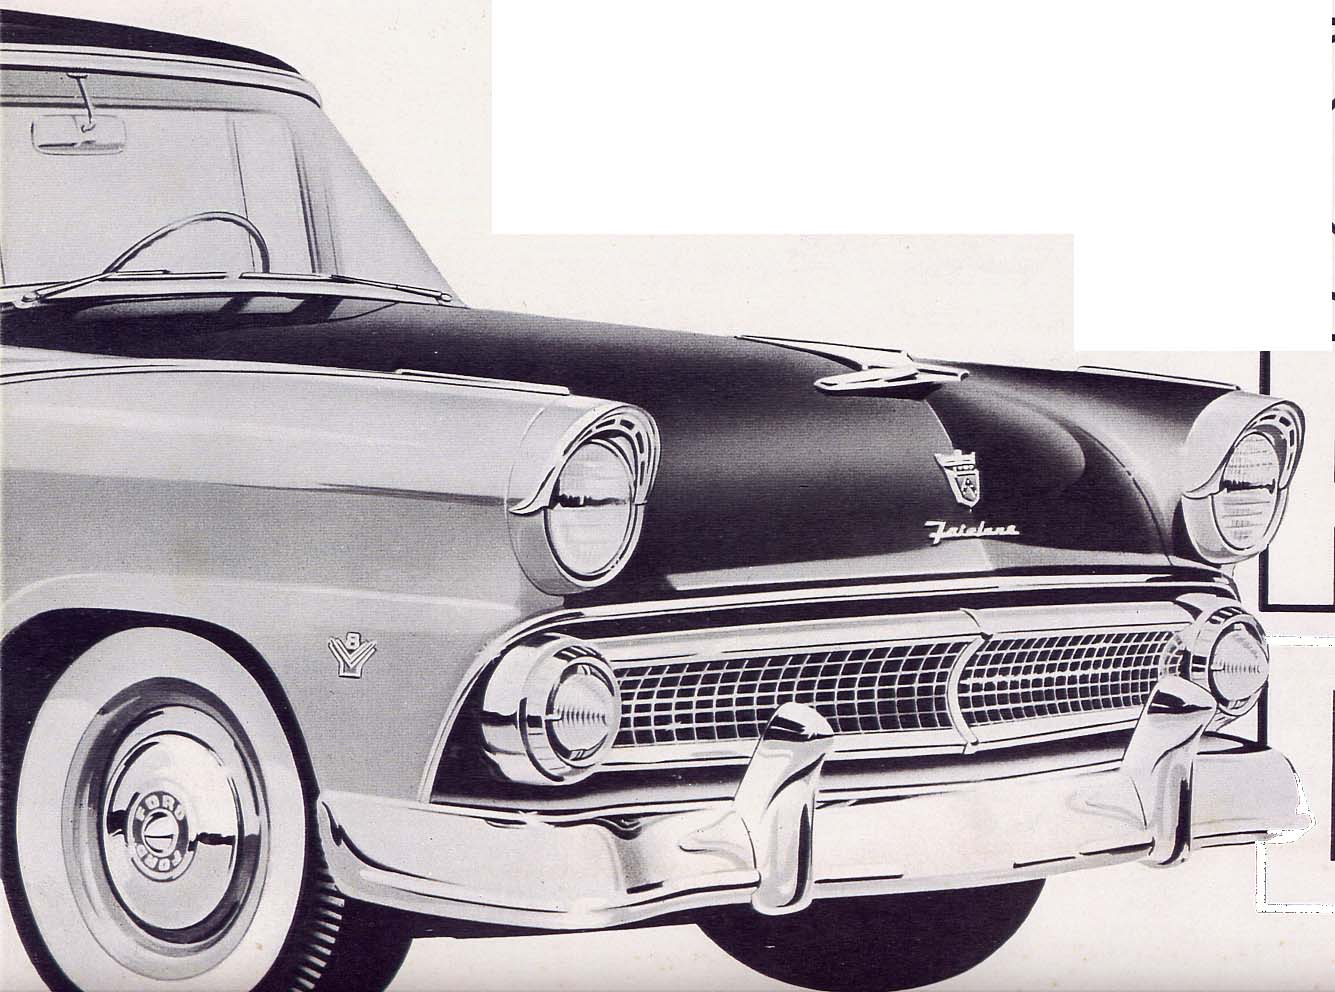 1954 ford customline